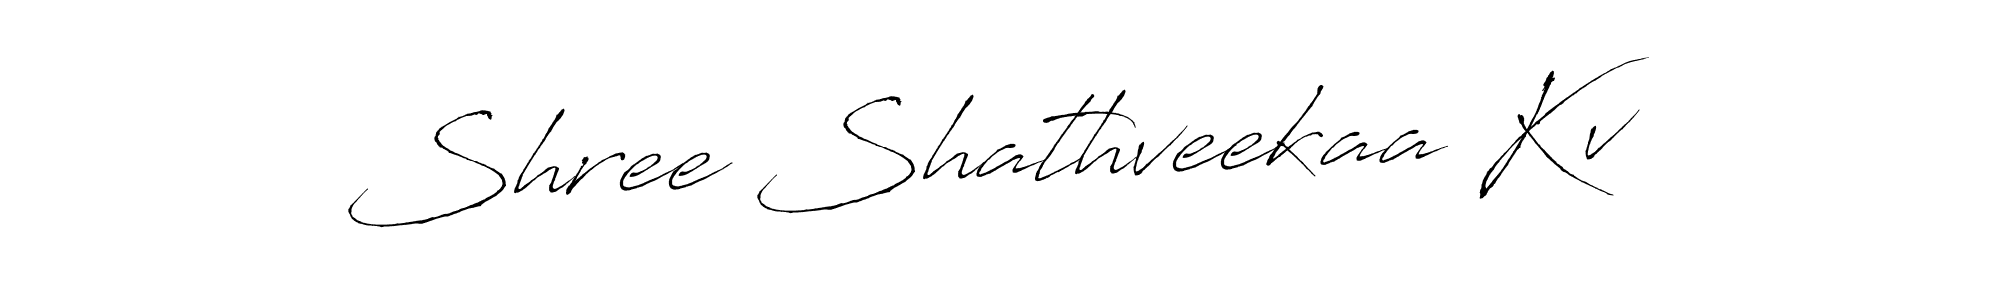 How to Draw Shree Shathveekaa Kv signature style? Antro_Vectra is a latest design signature styles for name Shree Shathveekaa Kv. Shree Shathveekaa Kv signature style 6 images and pictures png